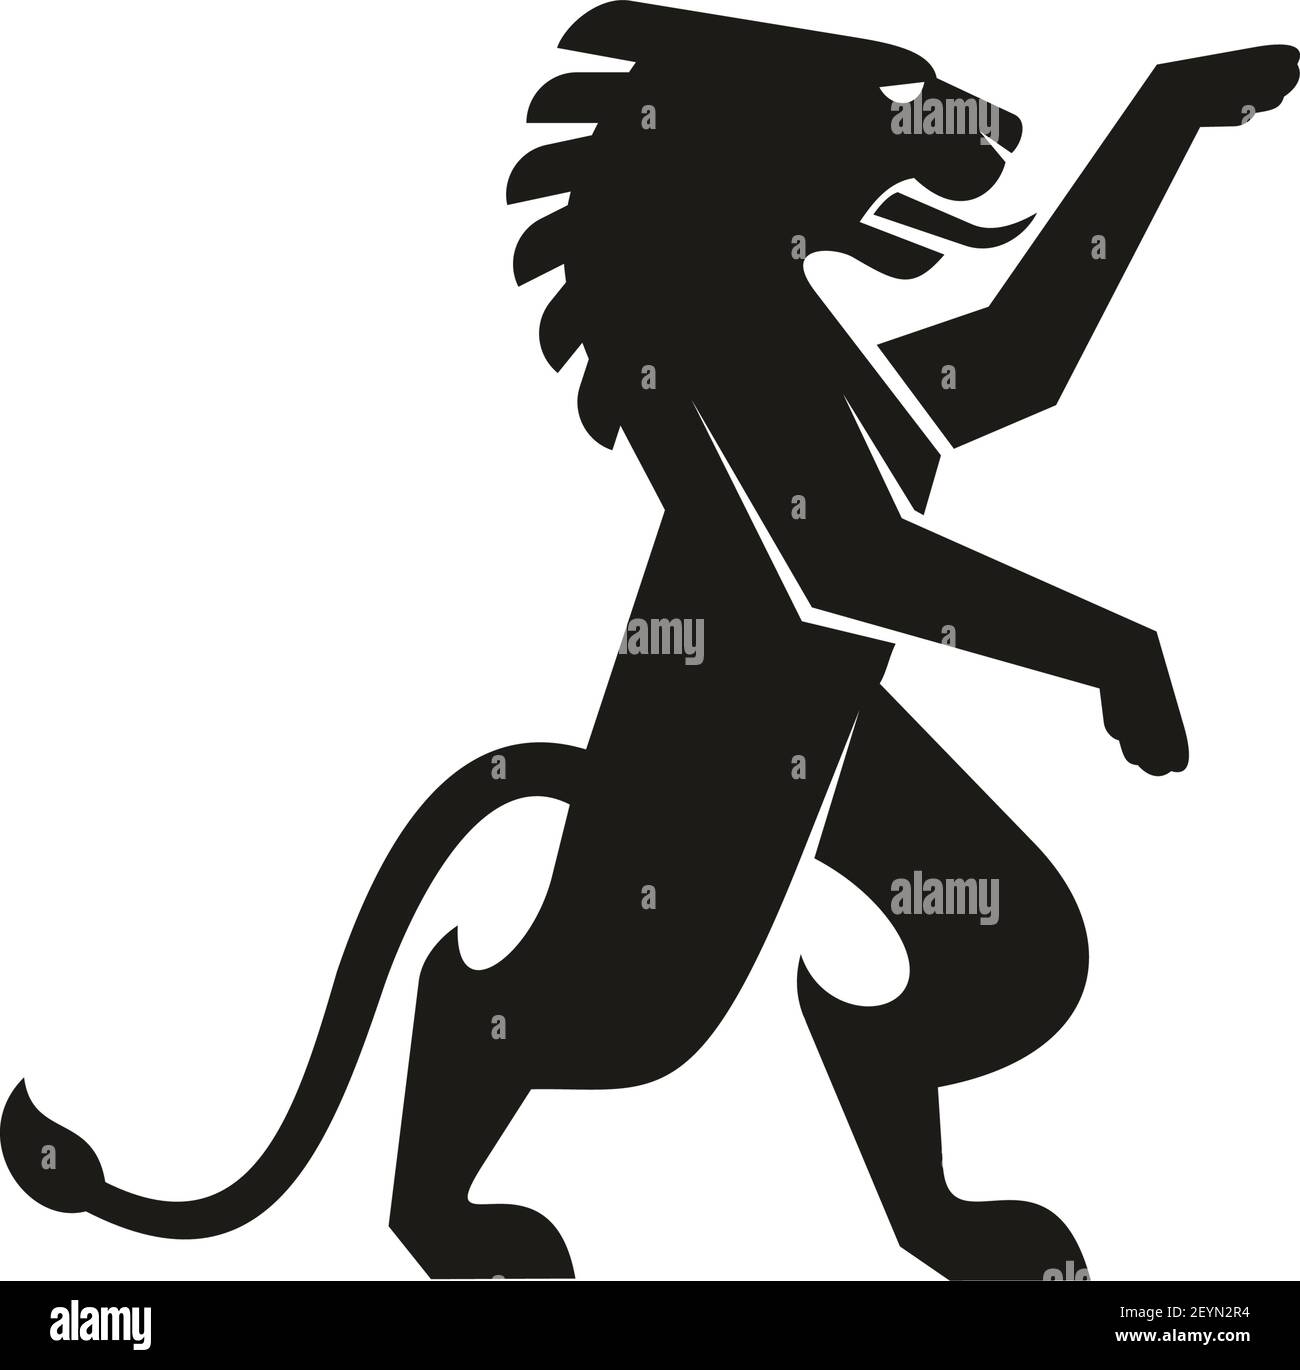 Lion or pegasus animal isolated heraldry symbol. Vector Japanese dragon mascot silhouette Stock Vector